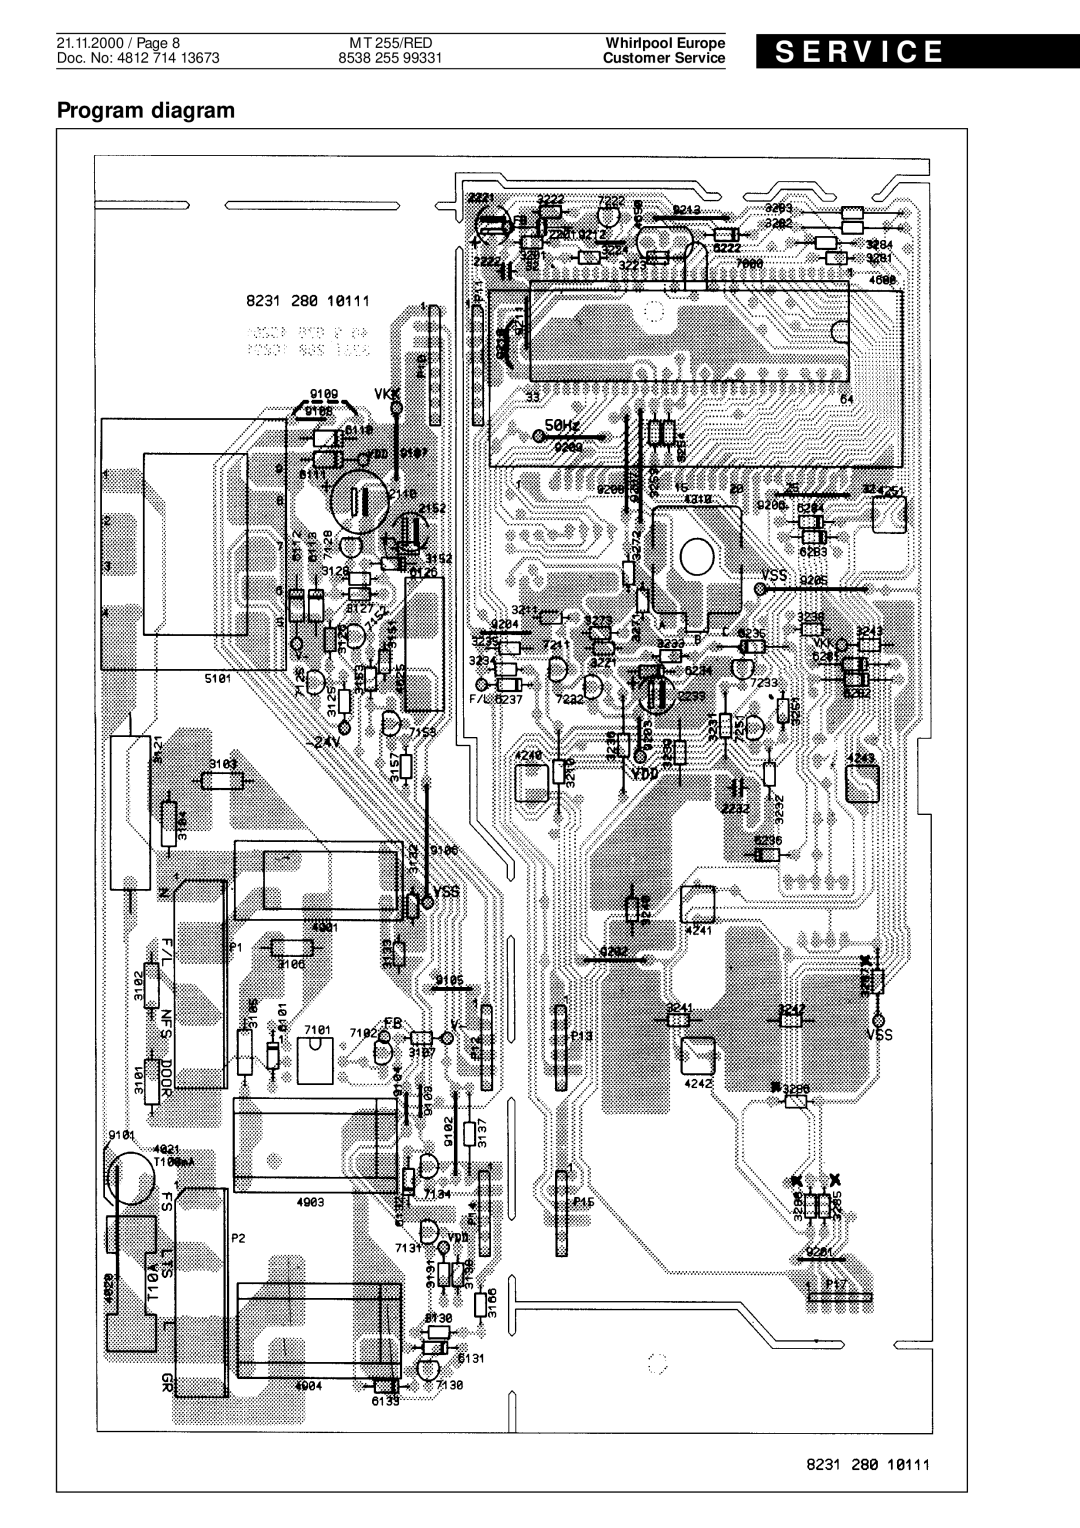 Whirlpool S E R V I C E, Program diagram, 21.11.2000 / Page, MT 255/RED, Doc. No, 8538 255, Whirlpool Europe 